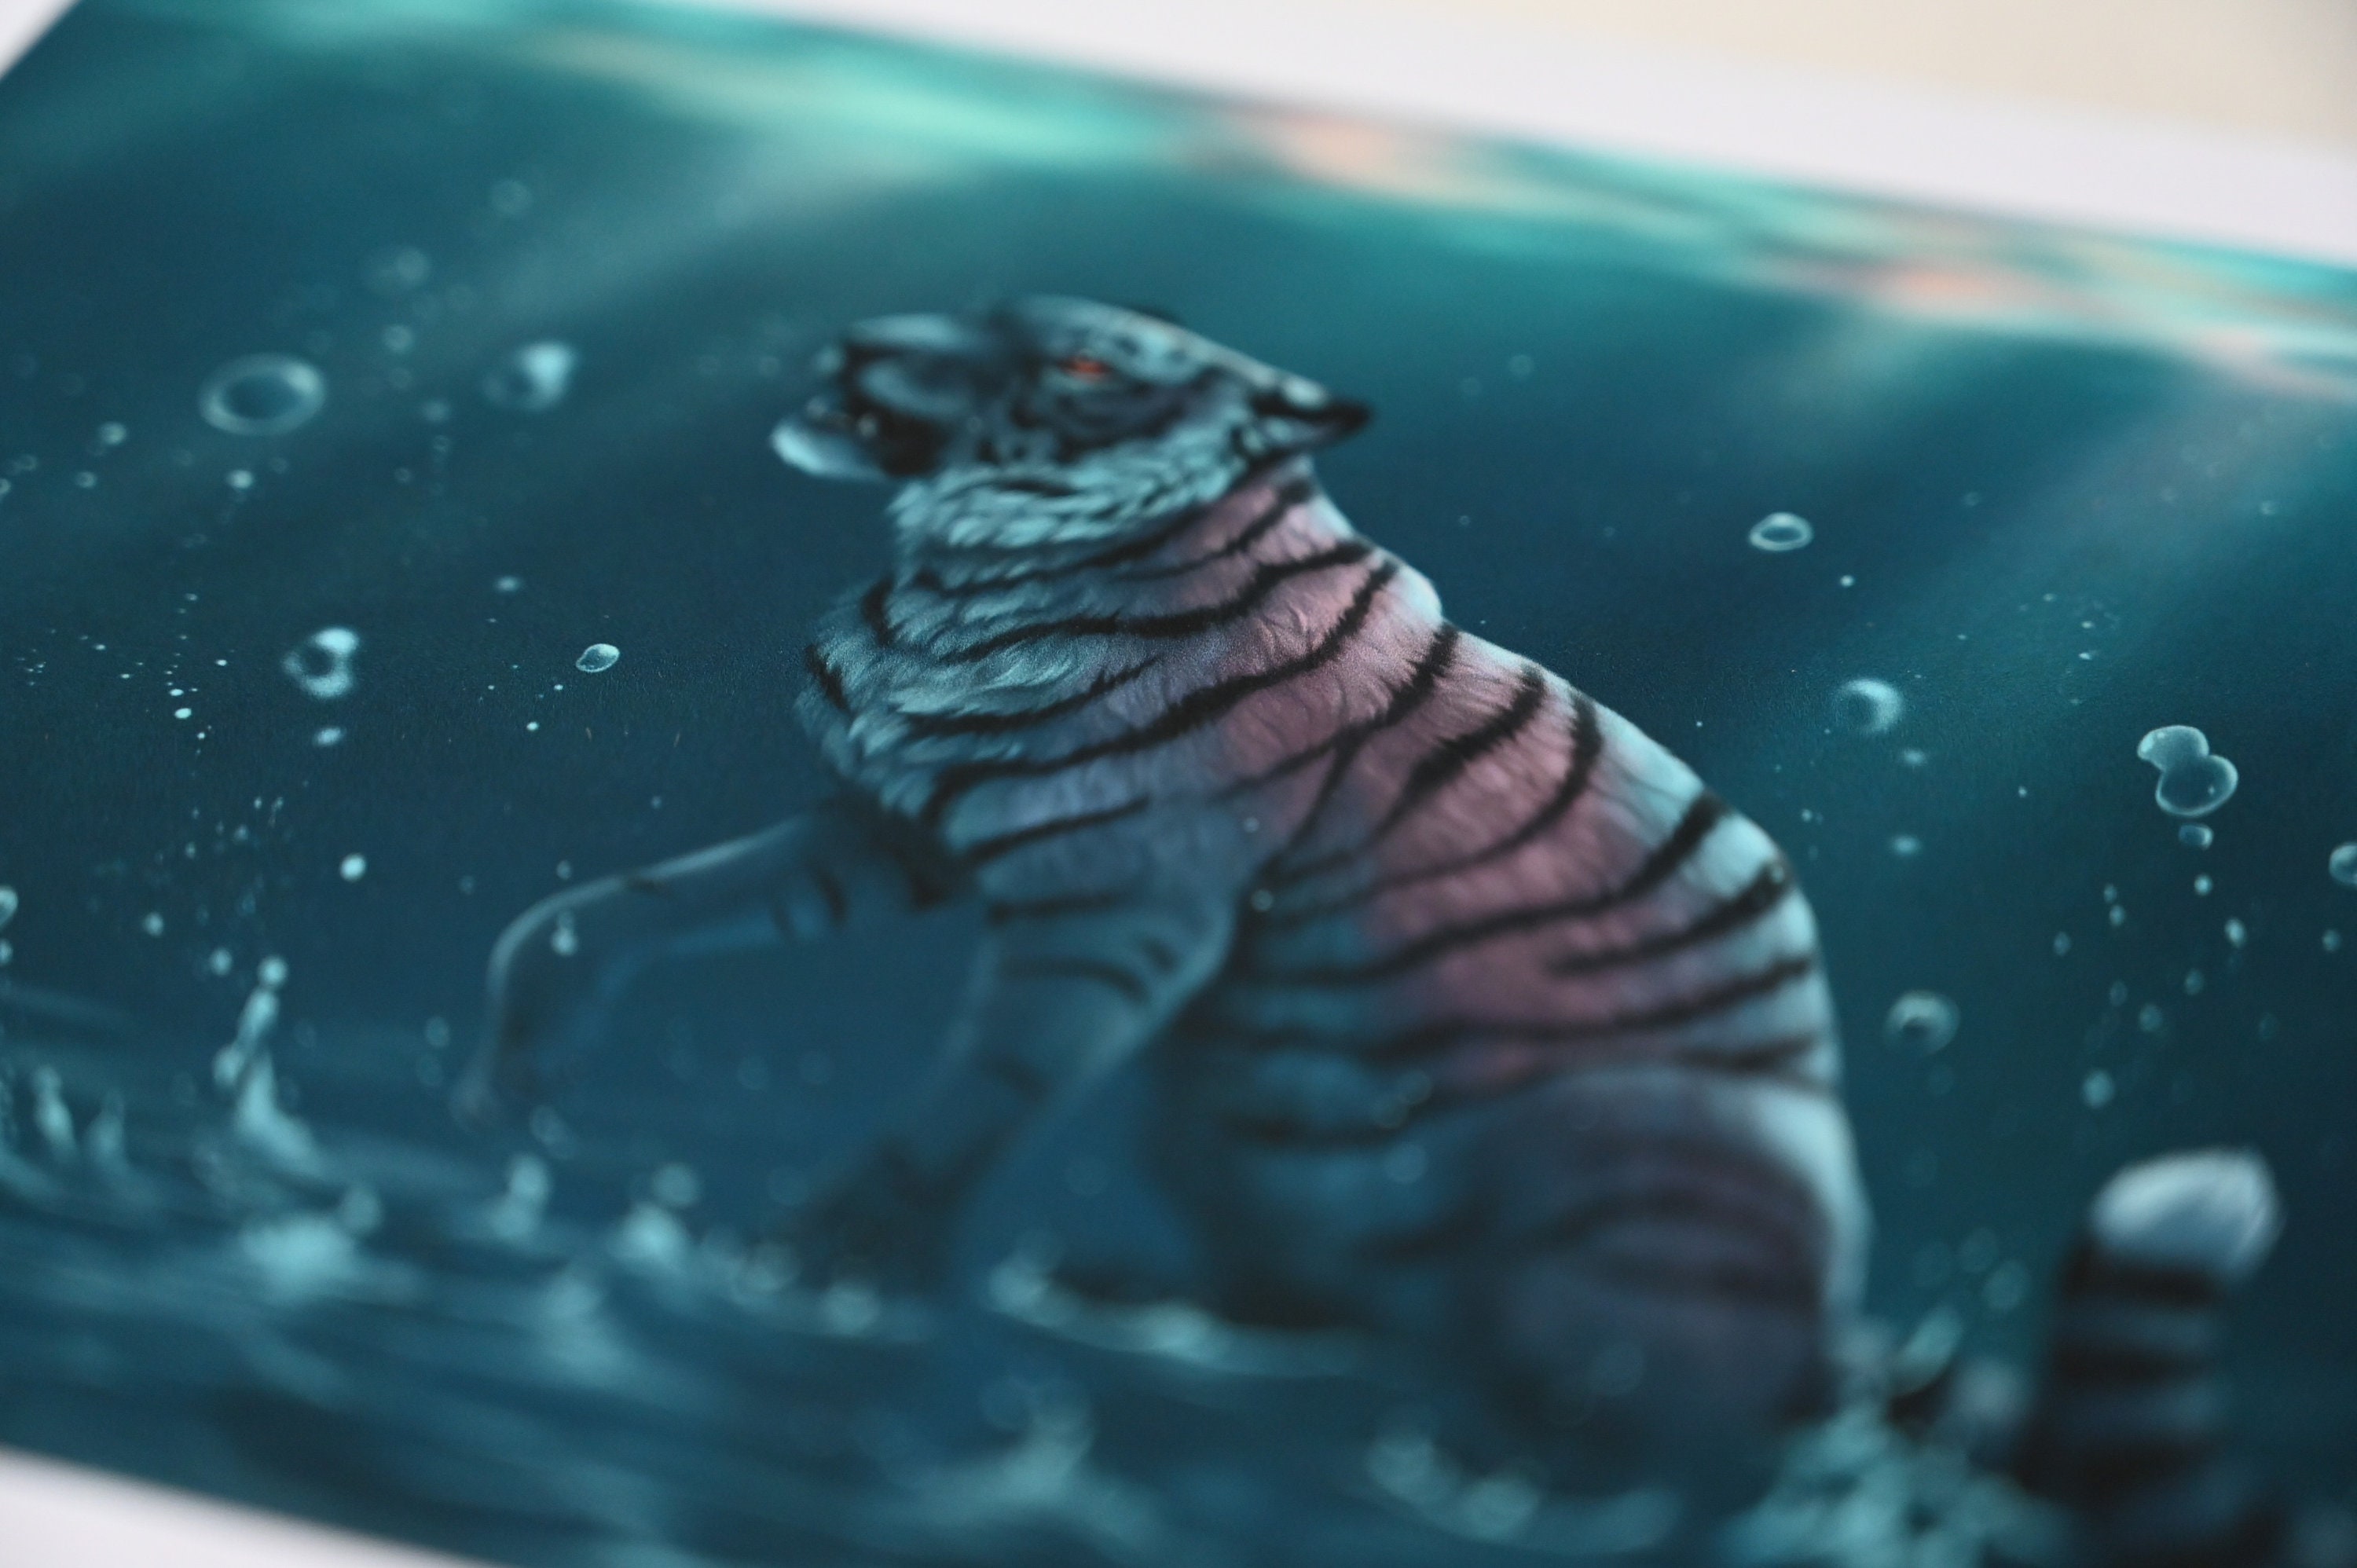 Underwater Tiger Surreal Fantasy Giclée Art Print Ocean Painting